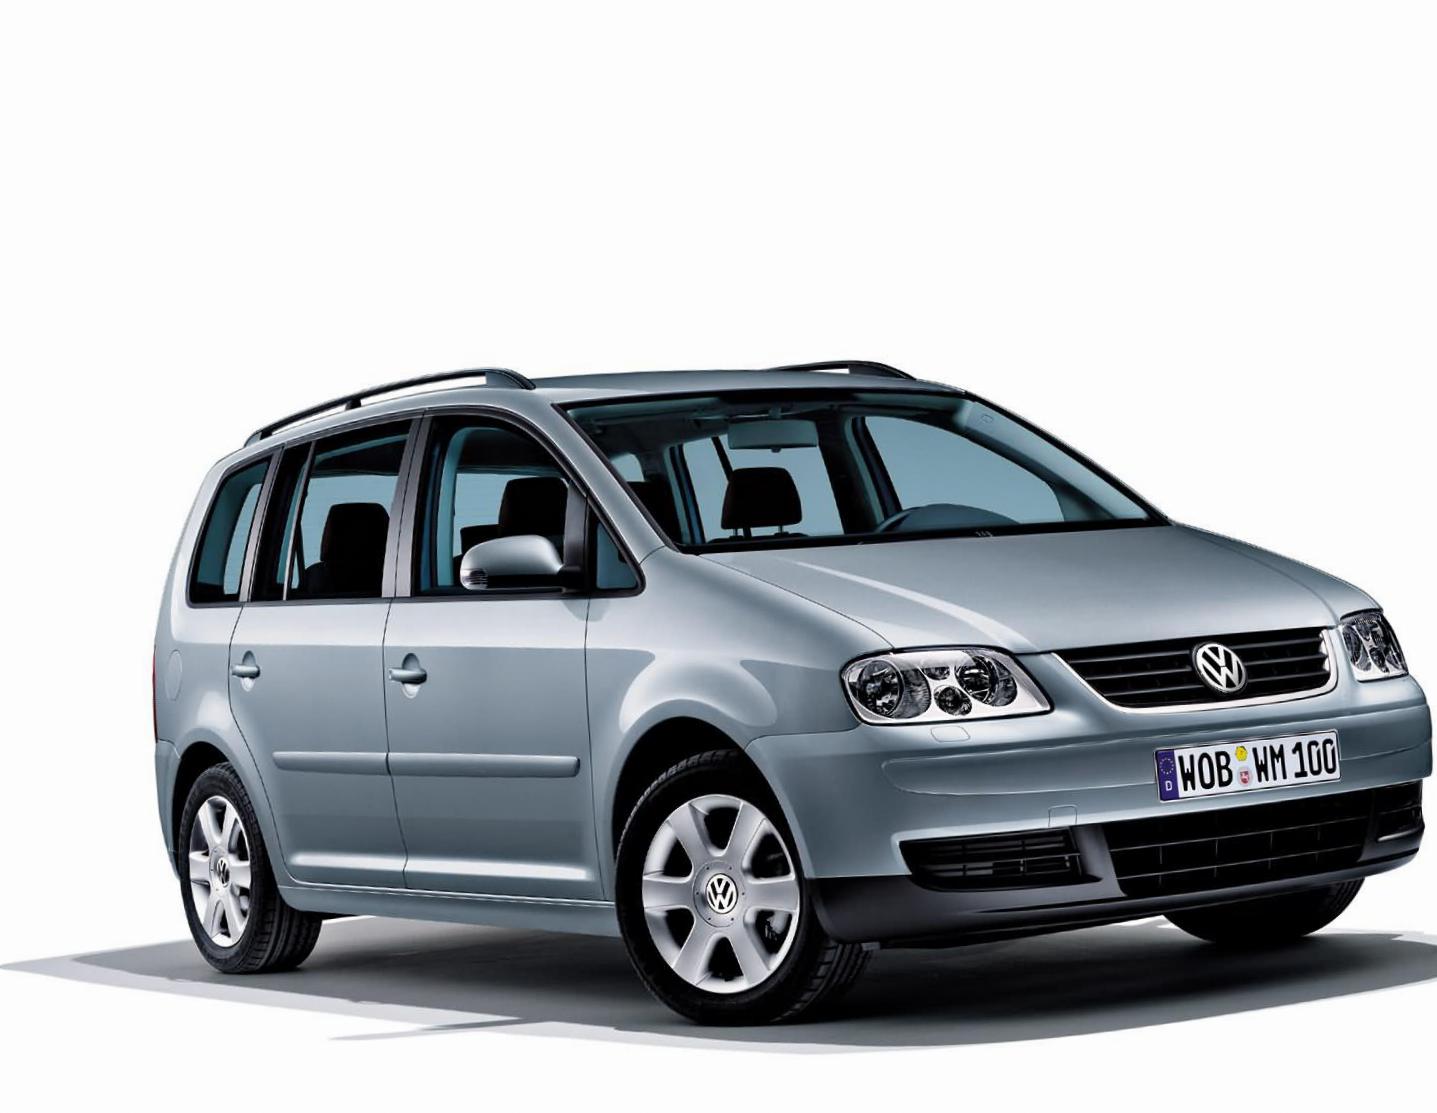 Volkswagen Touran review cabriolet